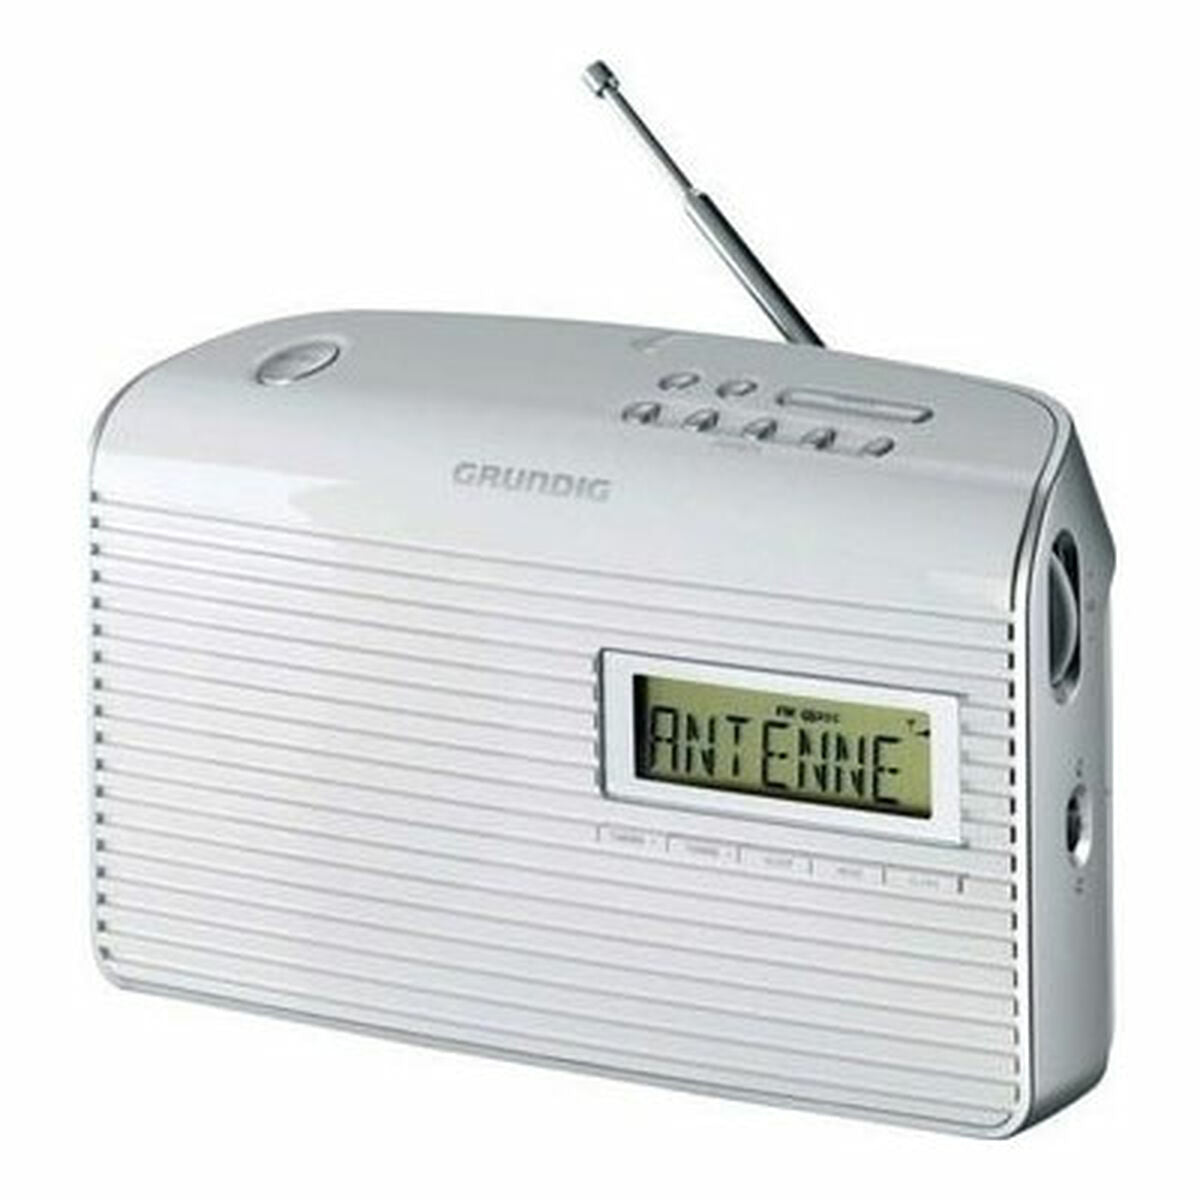 Transistorradio Grundig GRN1400 AM/FM Weiß